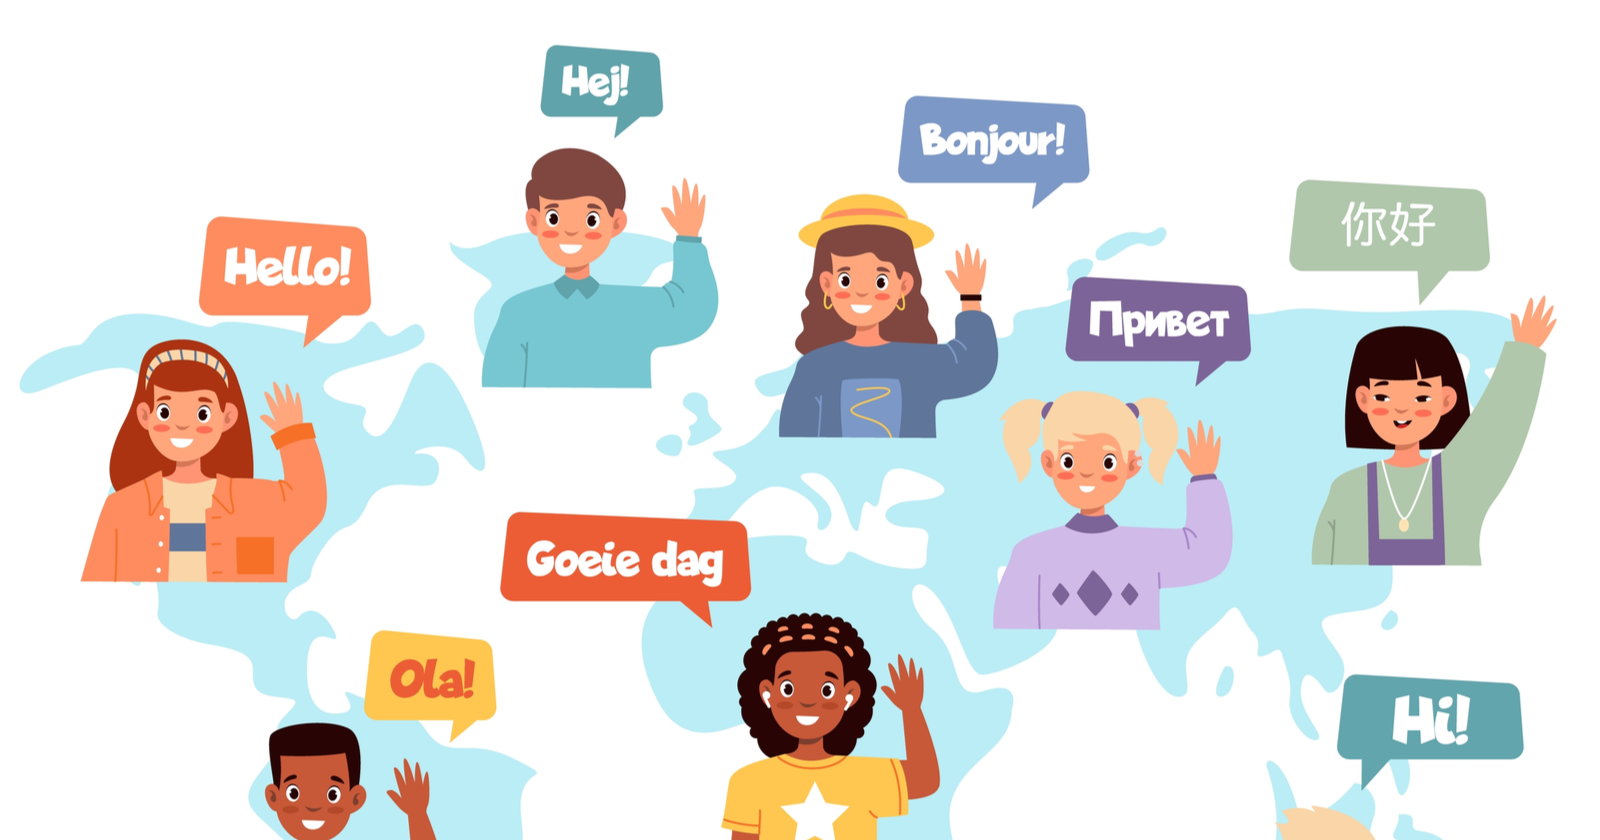 Google Uses Different Algorithms For Different Languages